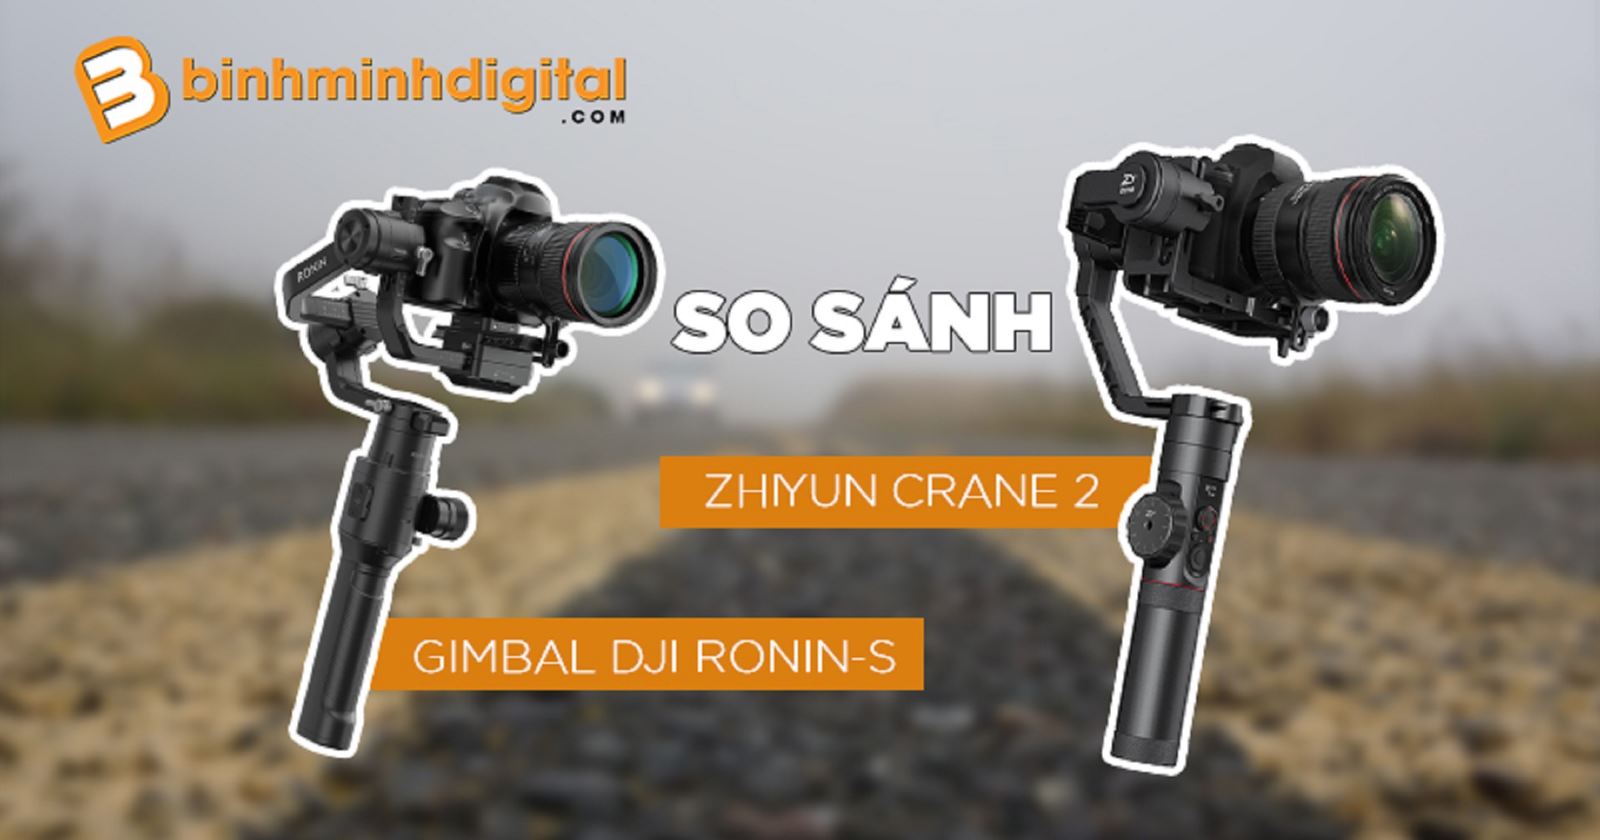 So sánh Gimbal DJI Ronin-S vs Zhiyun Crane 2